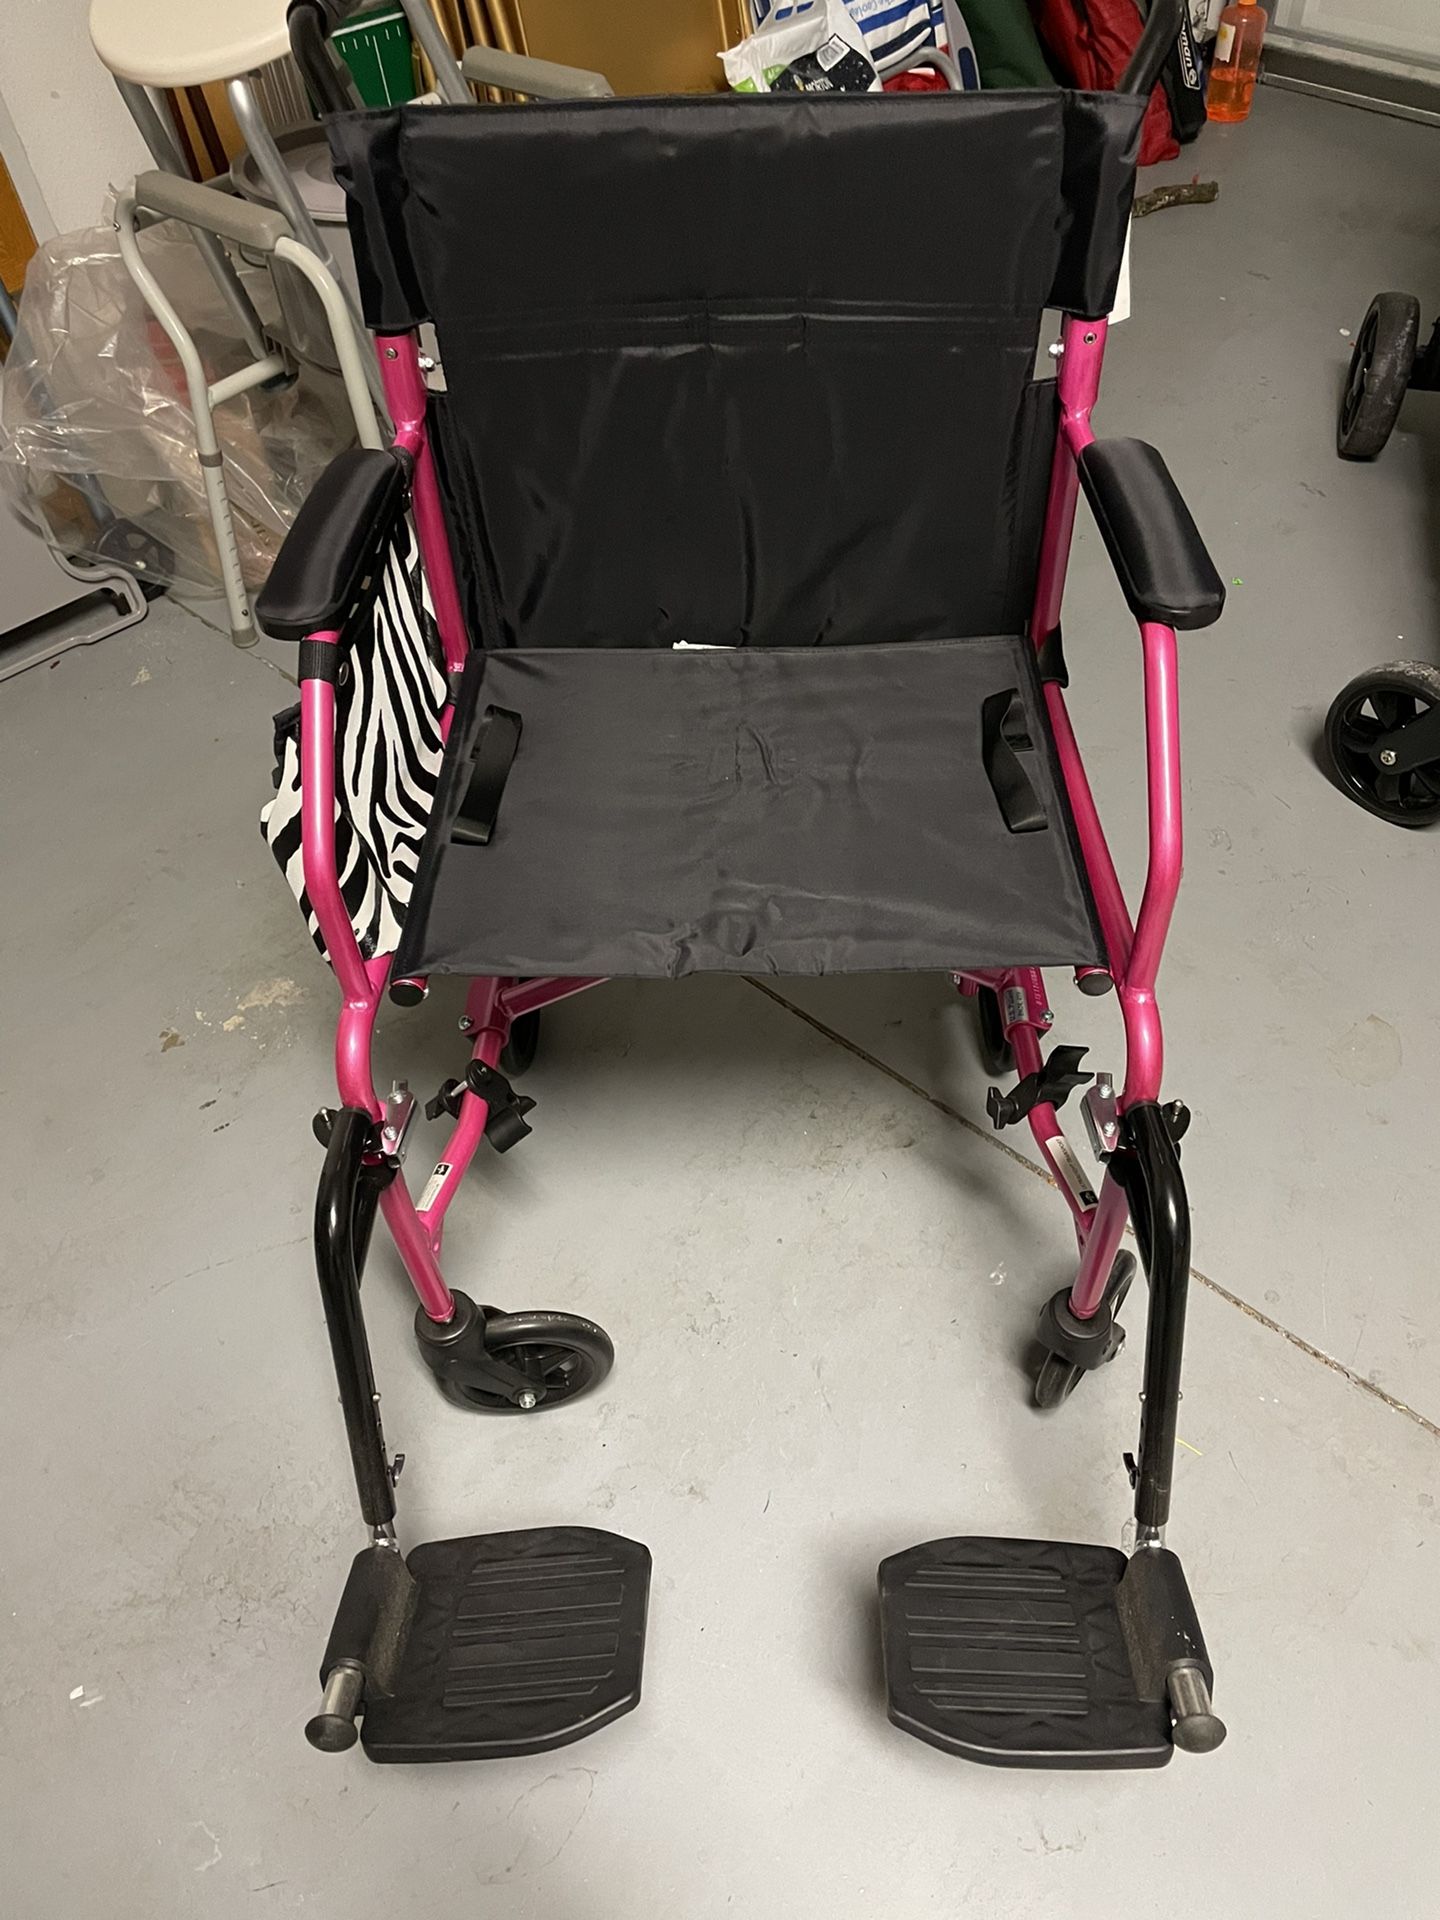 New Wheelchair 